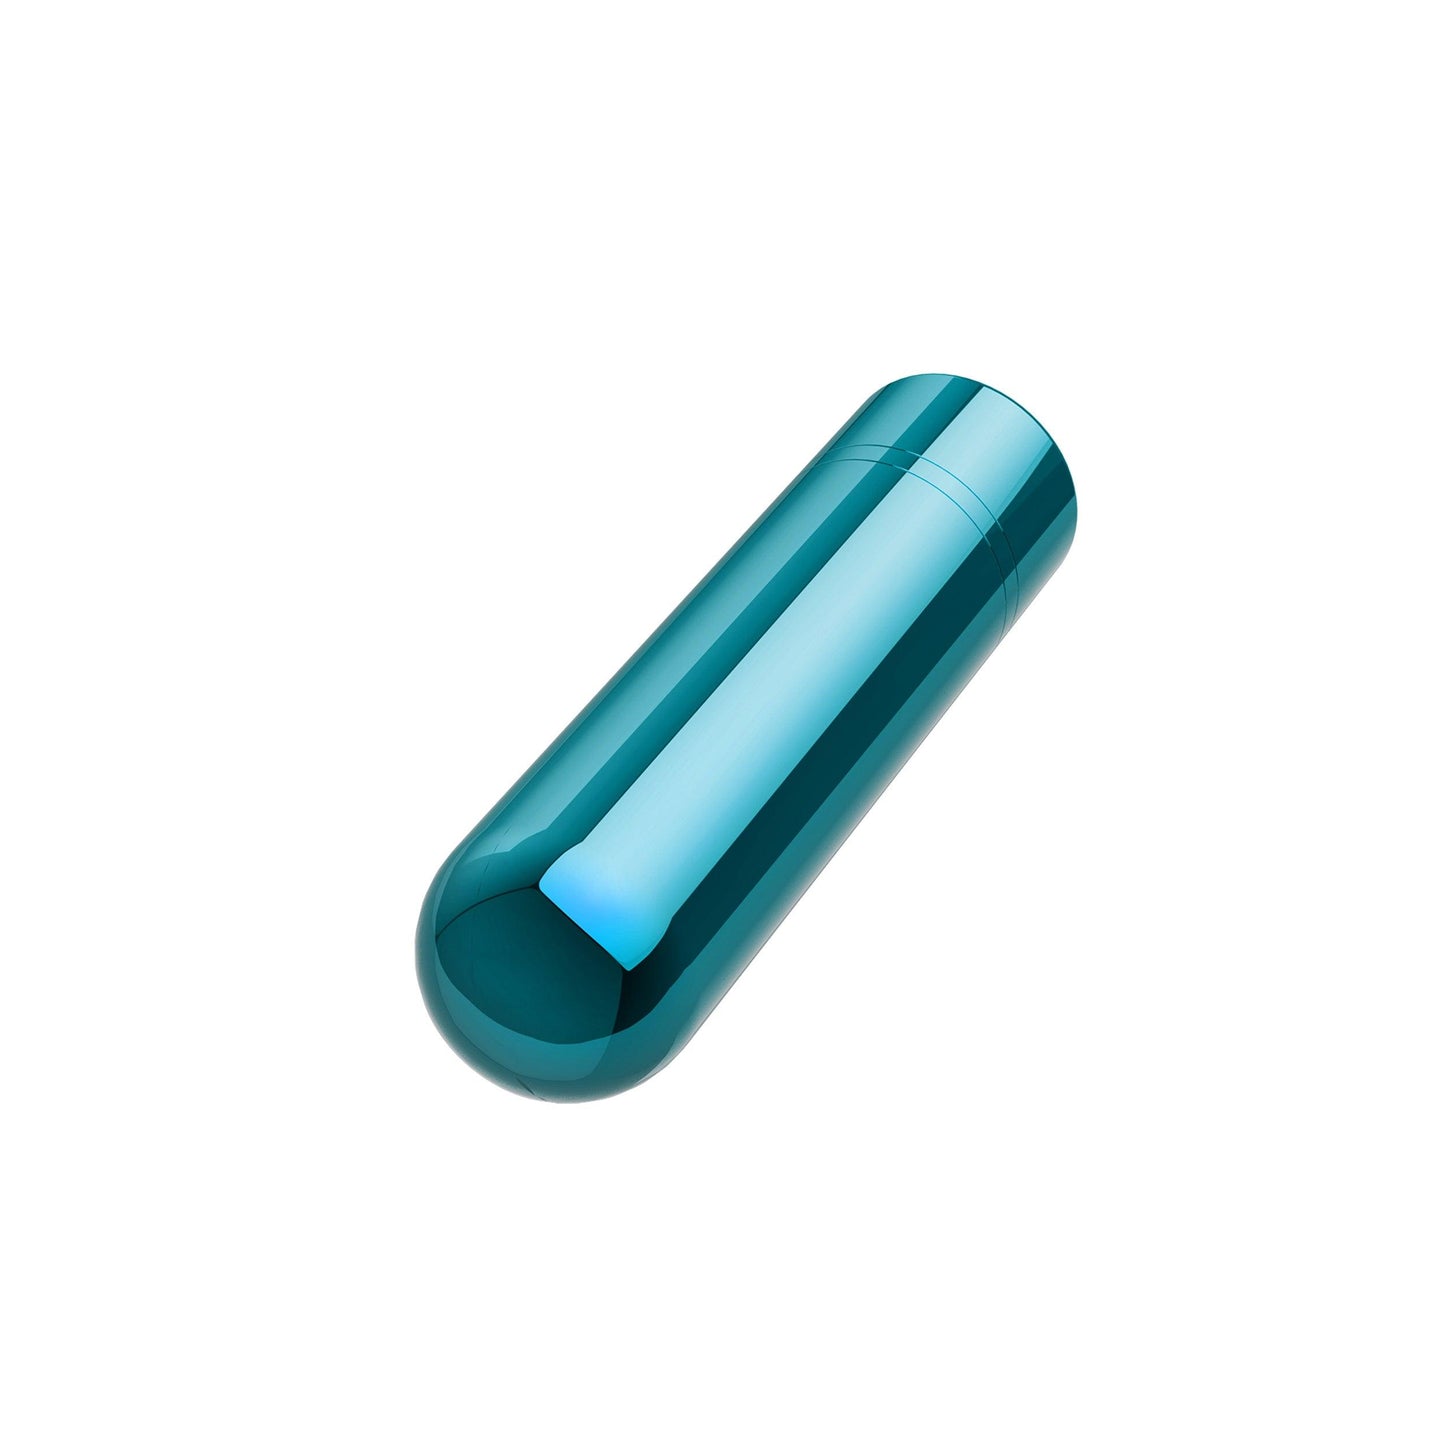 Kool Vibes - Rechargeable Mini Bullet - Blueberry - My Sex Toy Hub